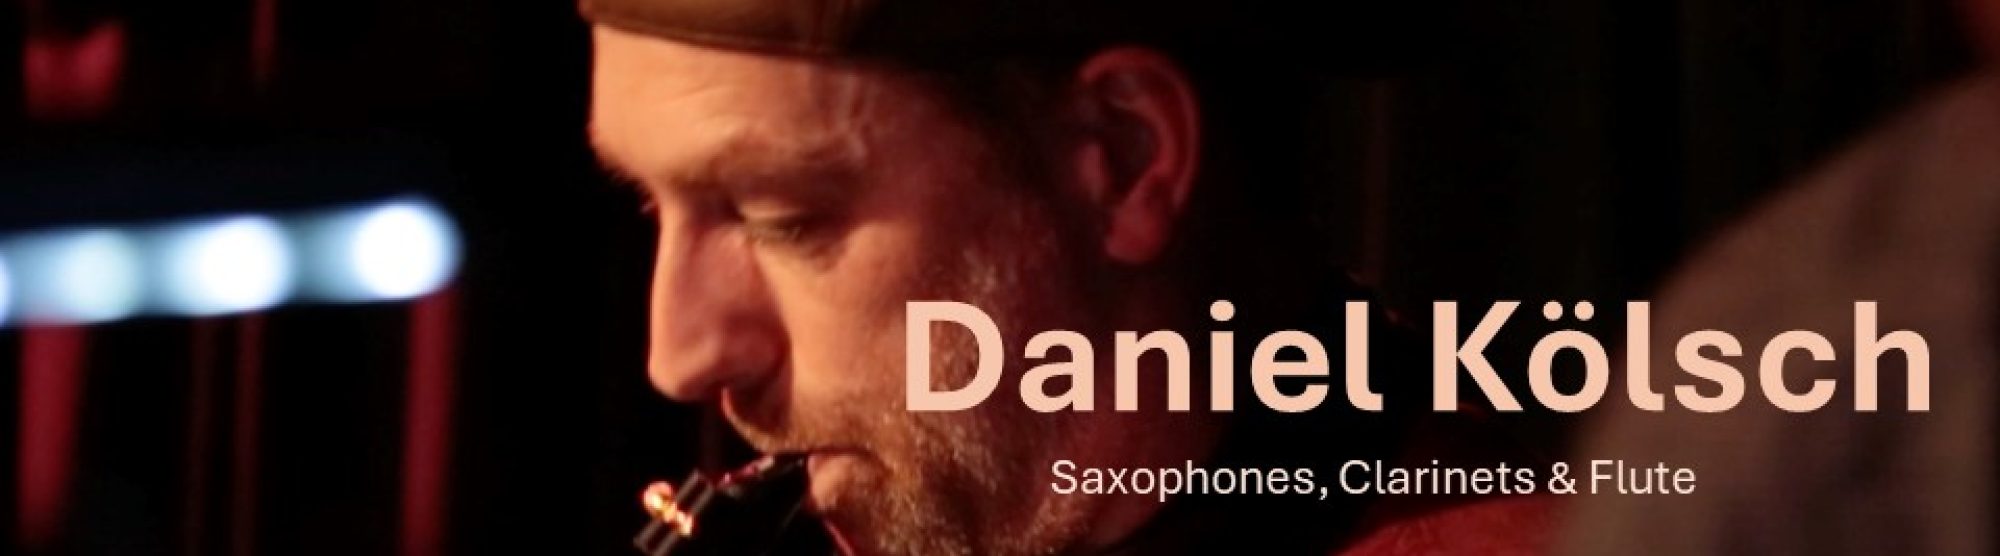 Daniel Kölsch – Saxophones, Clarinet & Flute